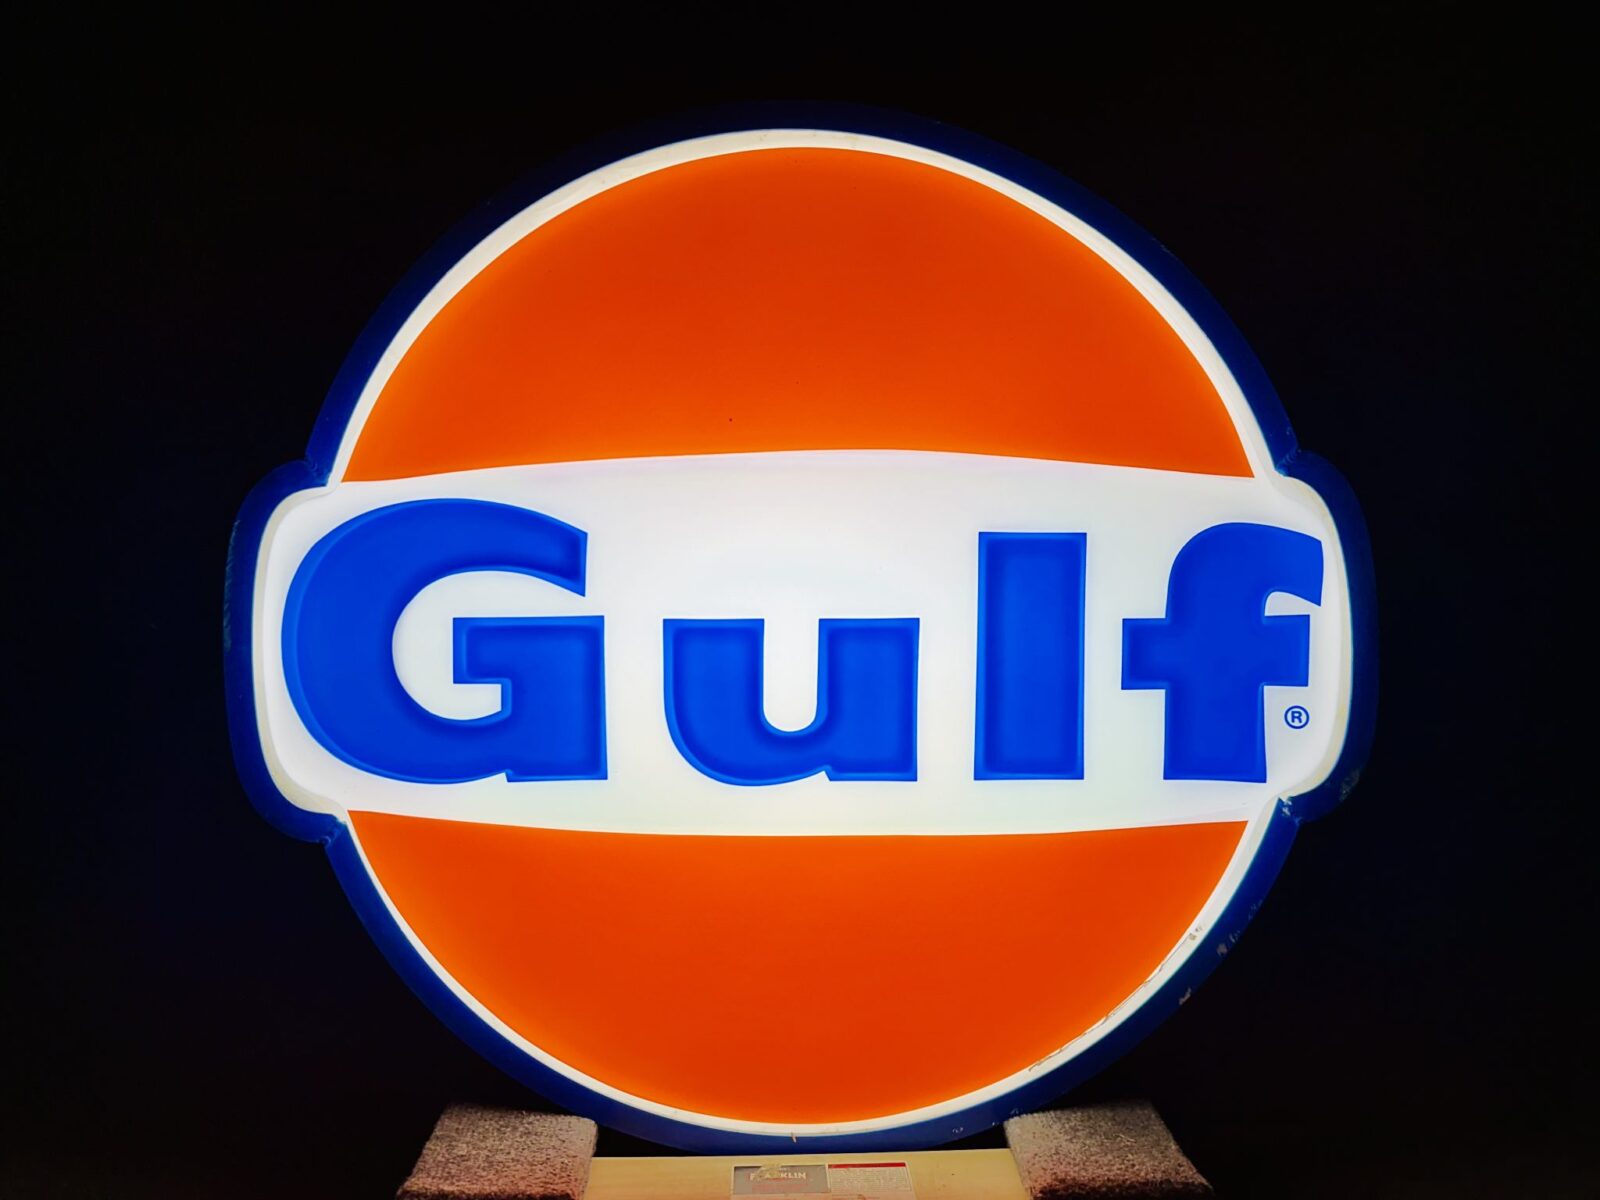 Gulf Oil Sign